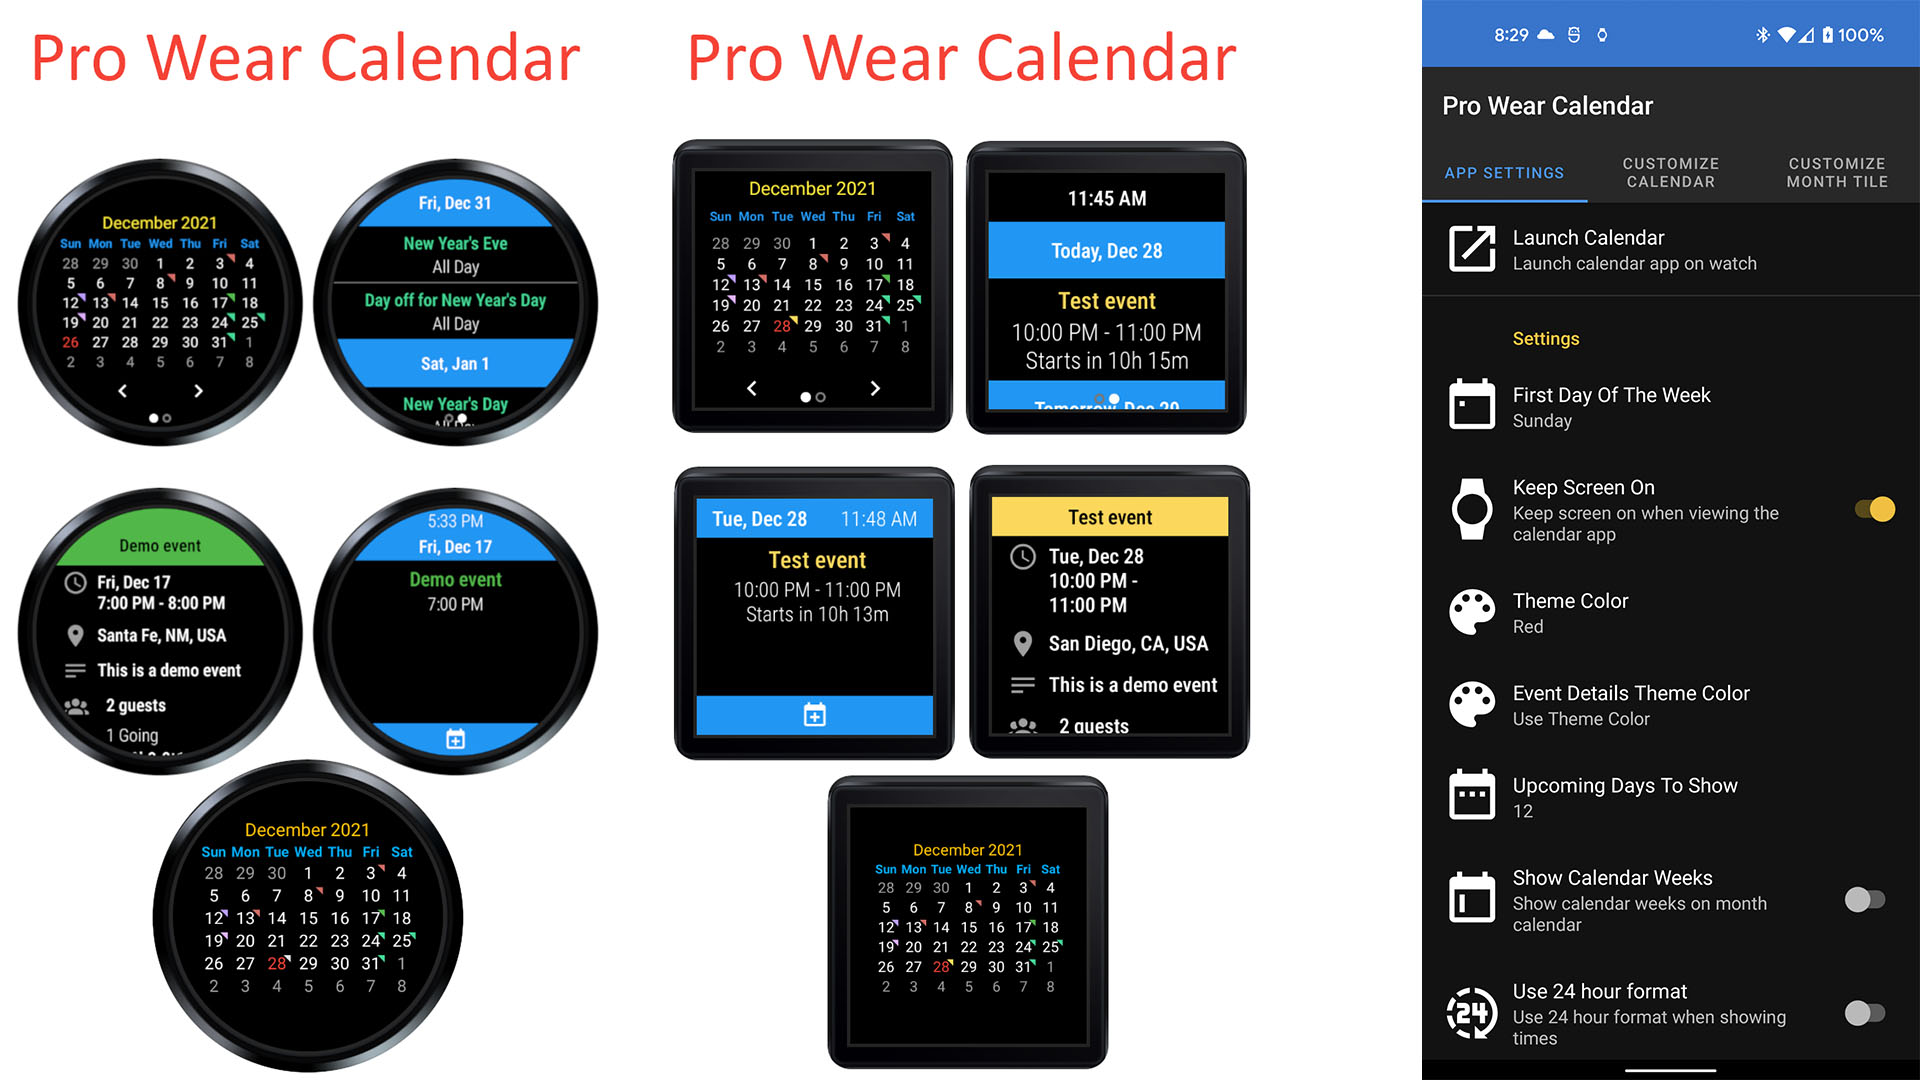 Captura de pantalla del calendario Pro Wear 2022